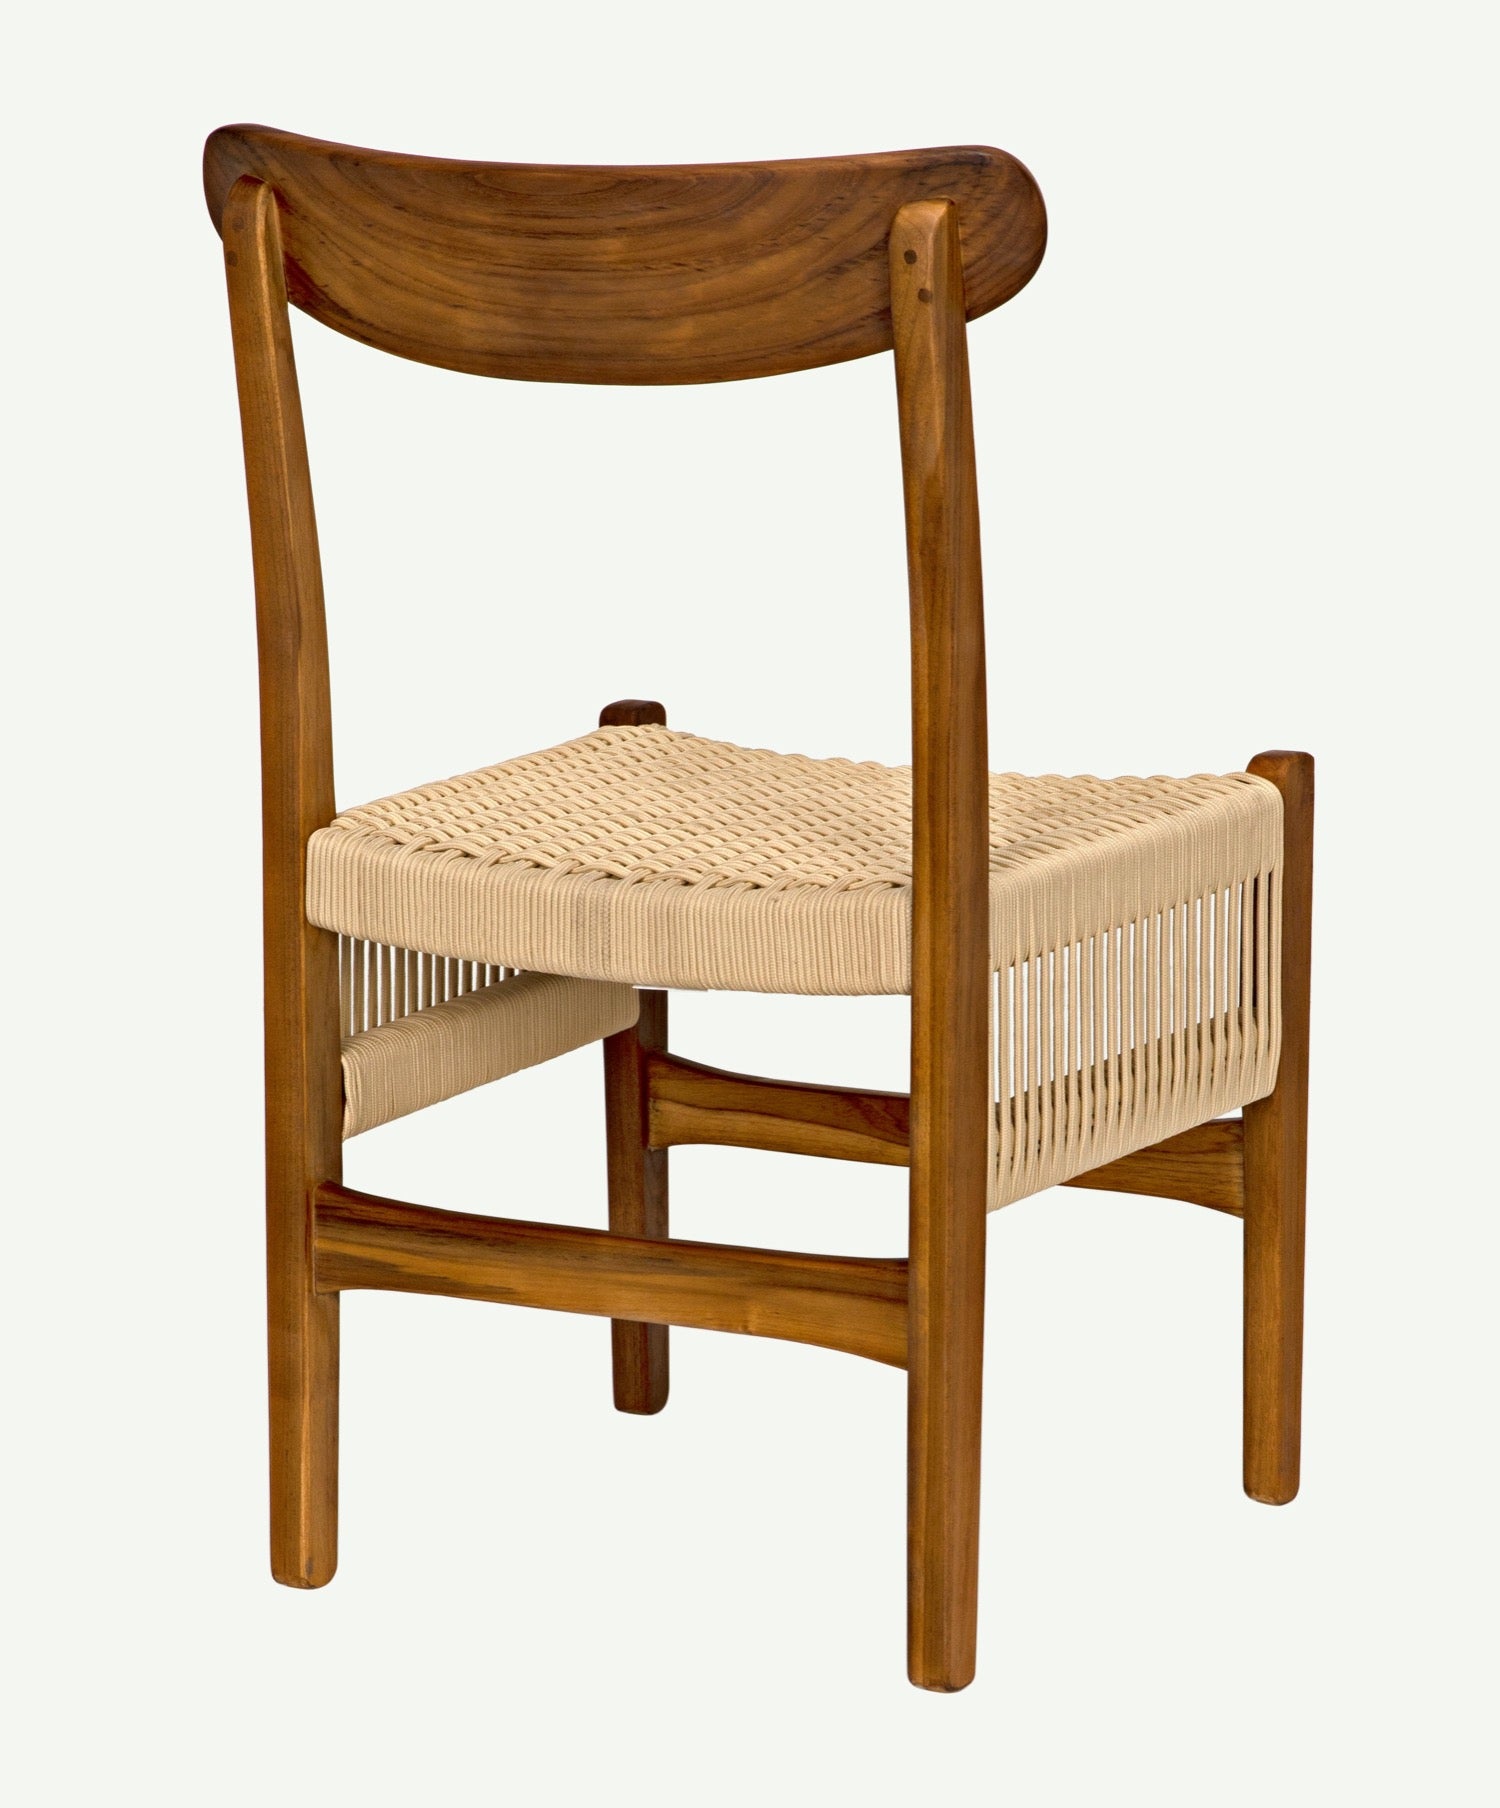 Shagira Chair